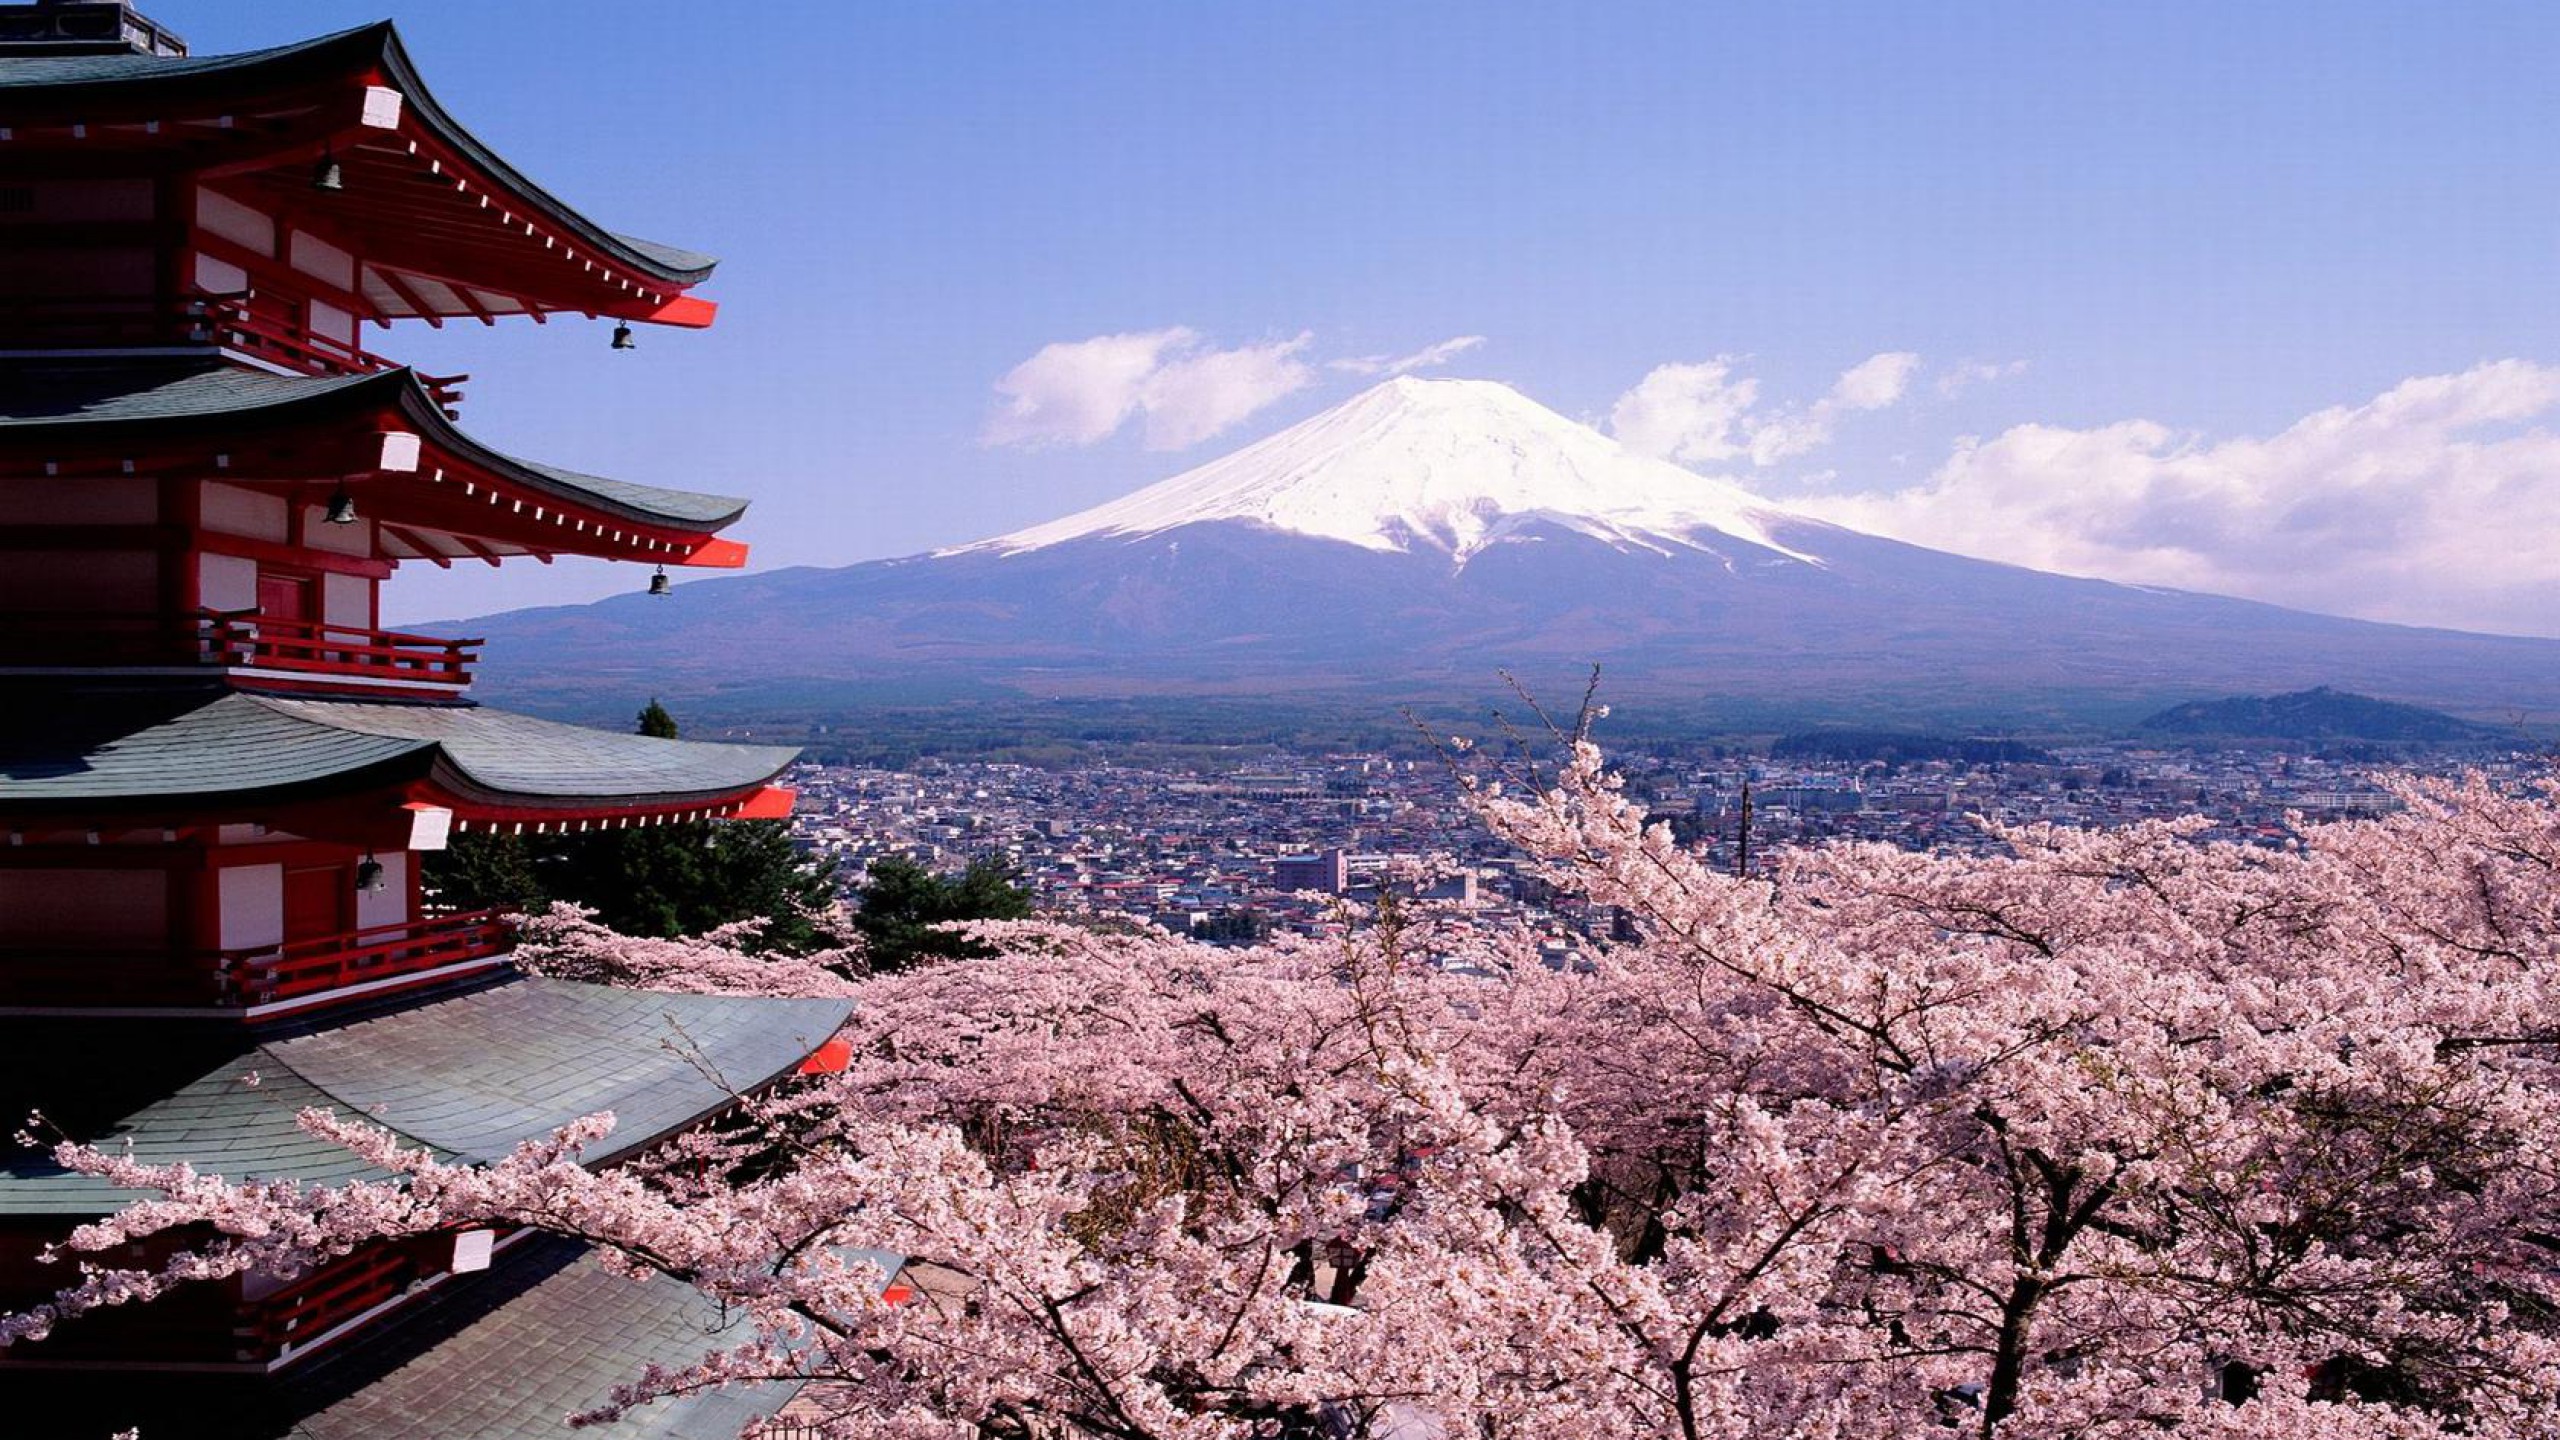 Mount Fuji Japan Wallpaper   Travel HD Wallpapers